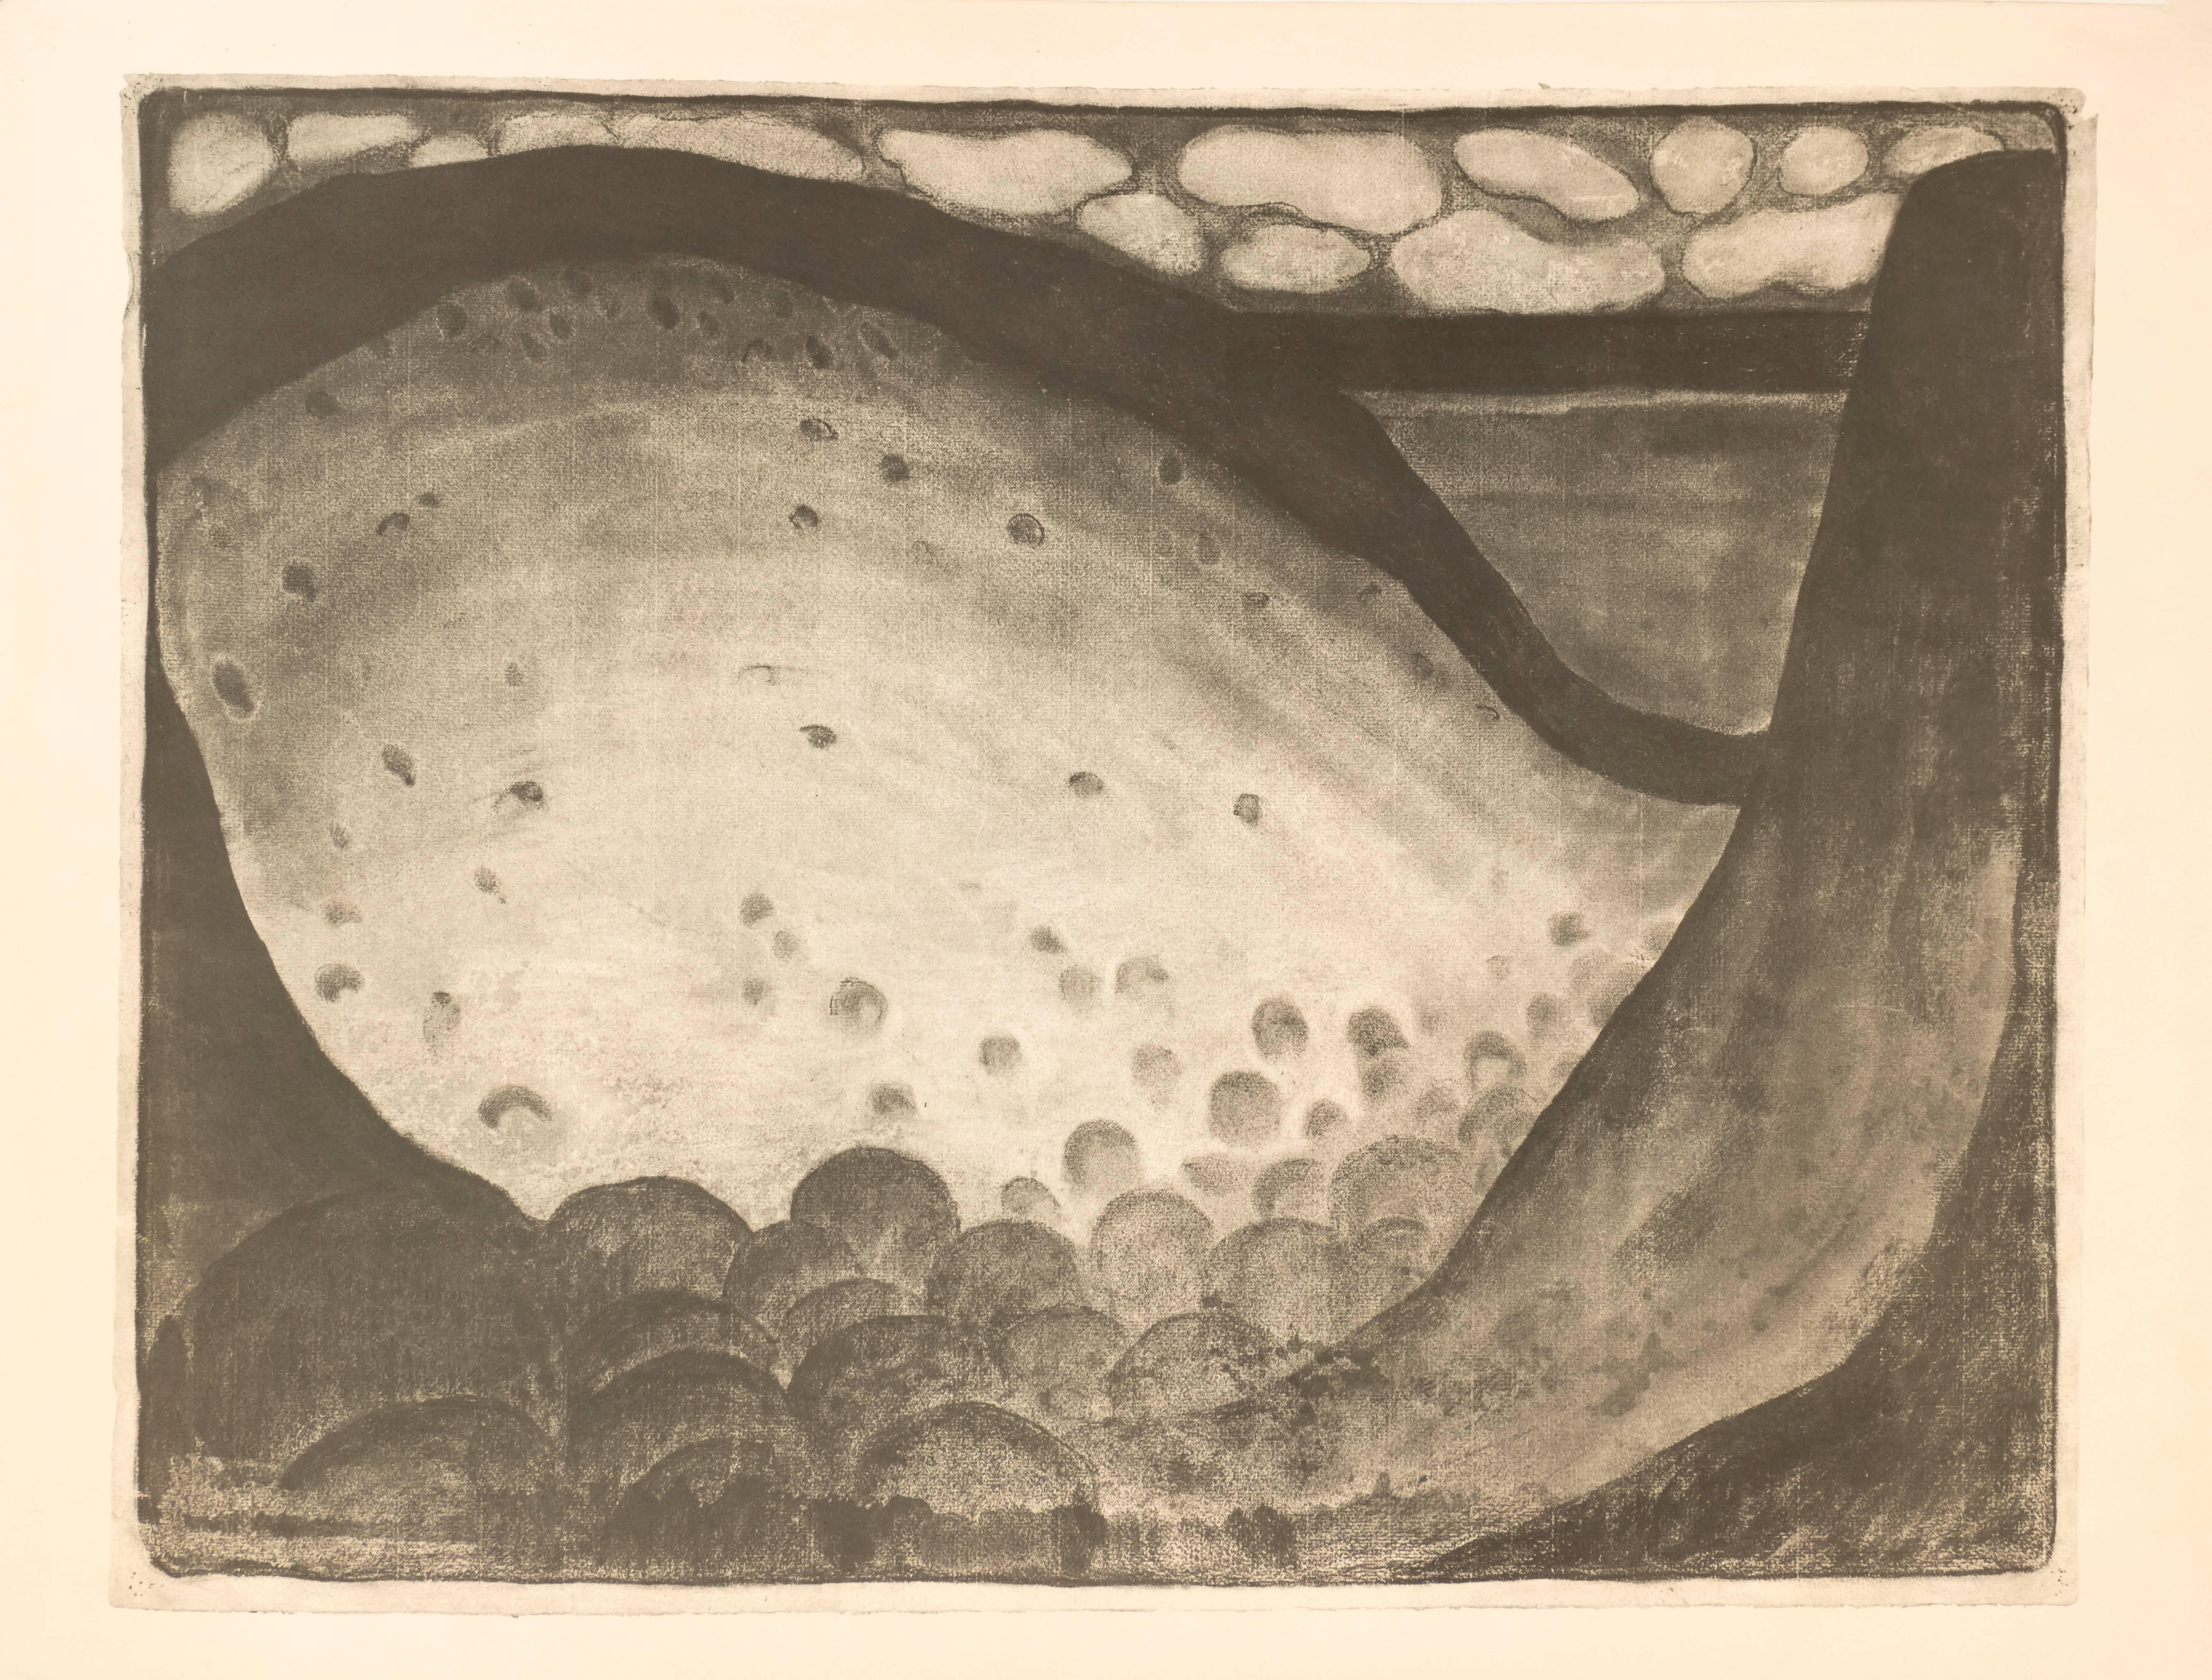 Georgia O'Keeffe Abstract Print - Atlantis Edition, Drawing Number 15, Plate VI